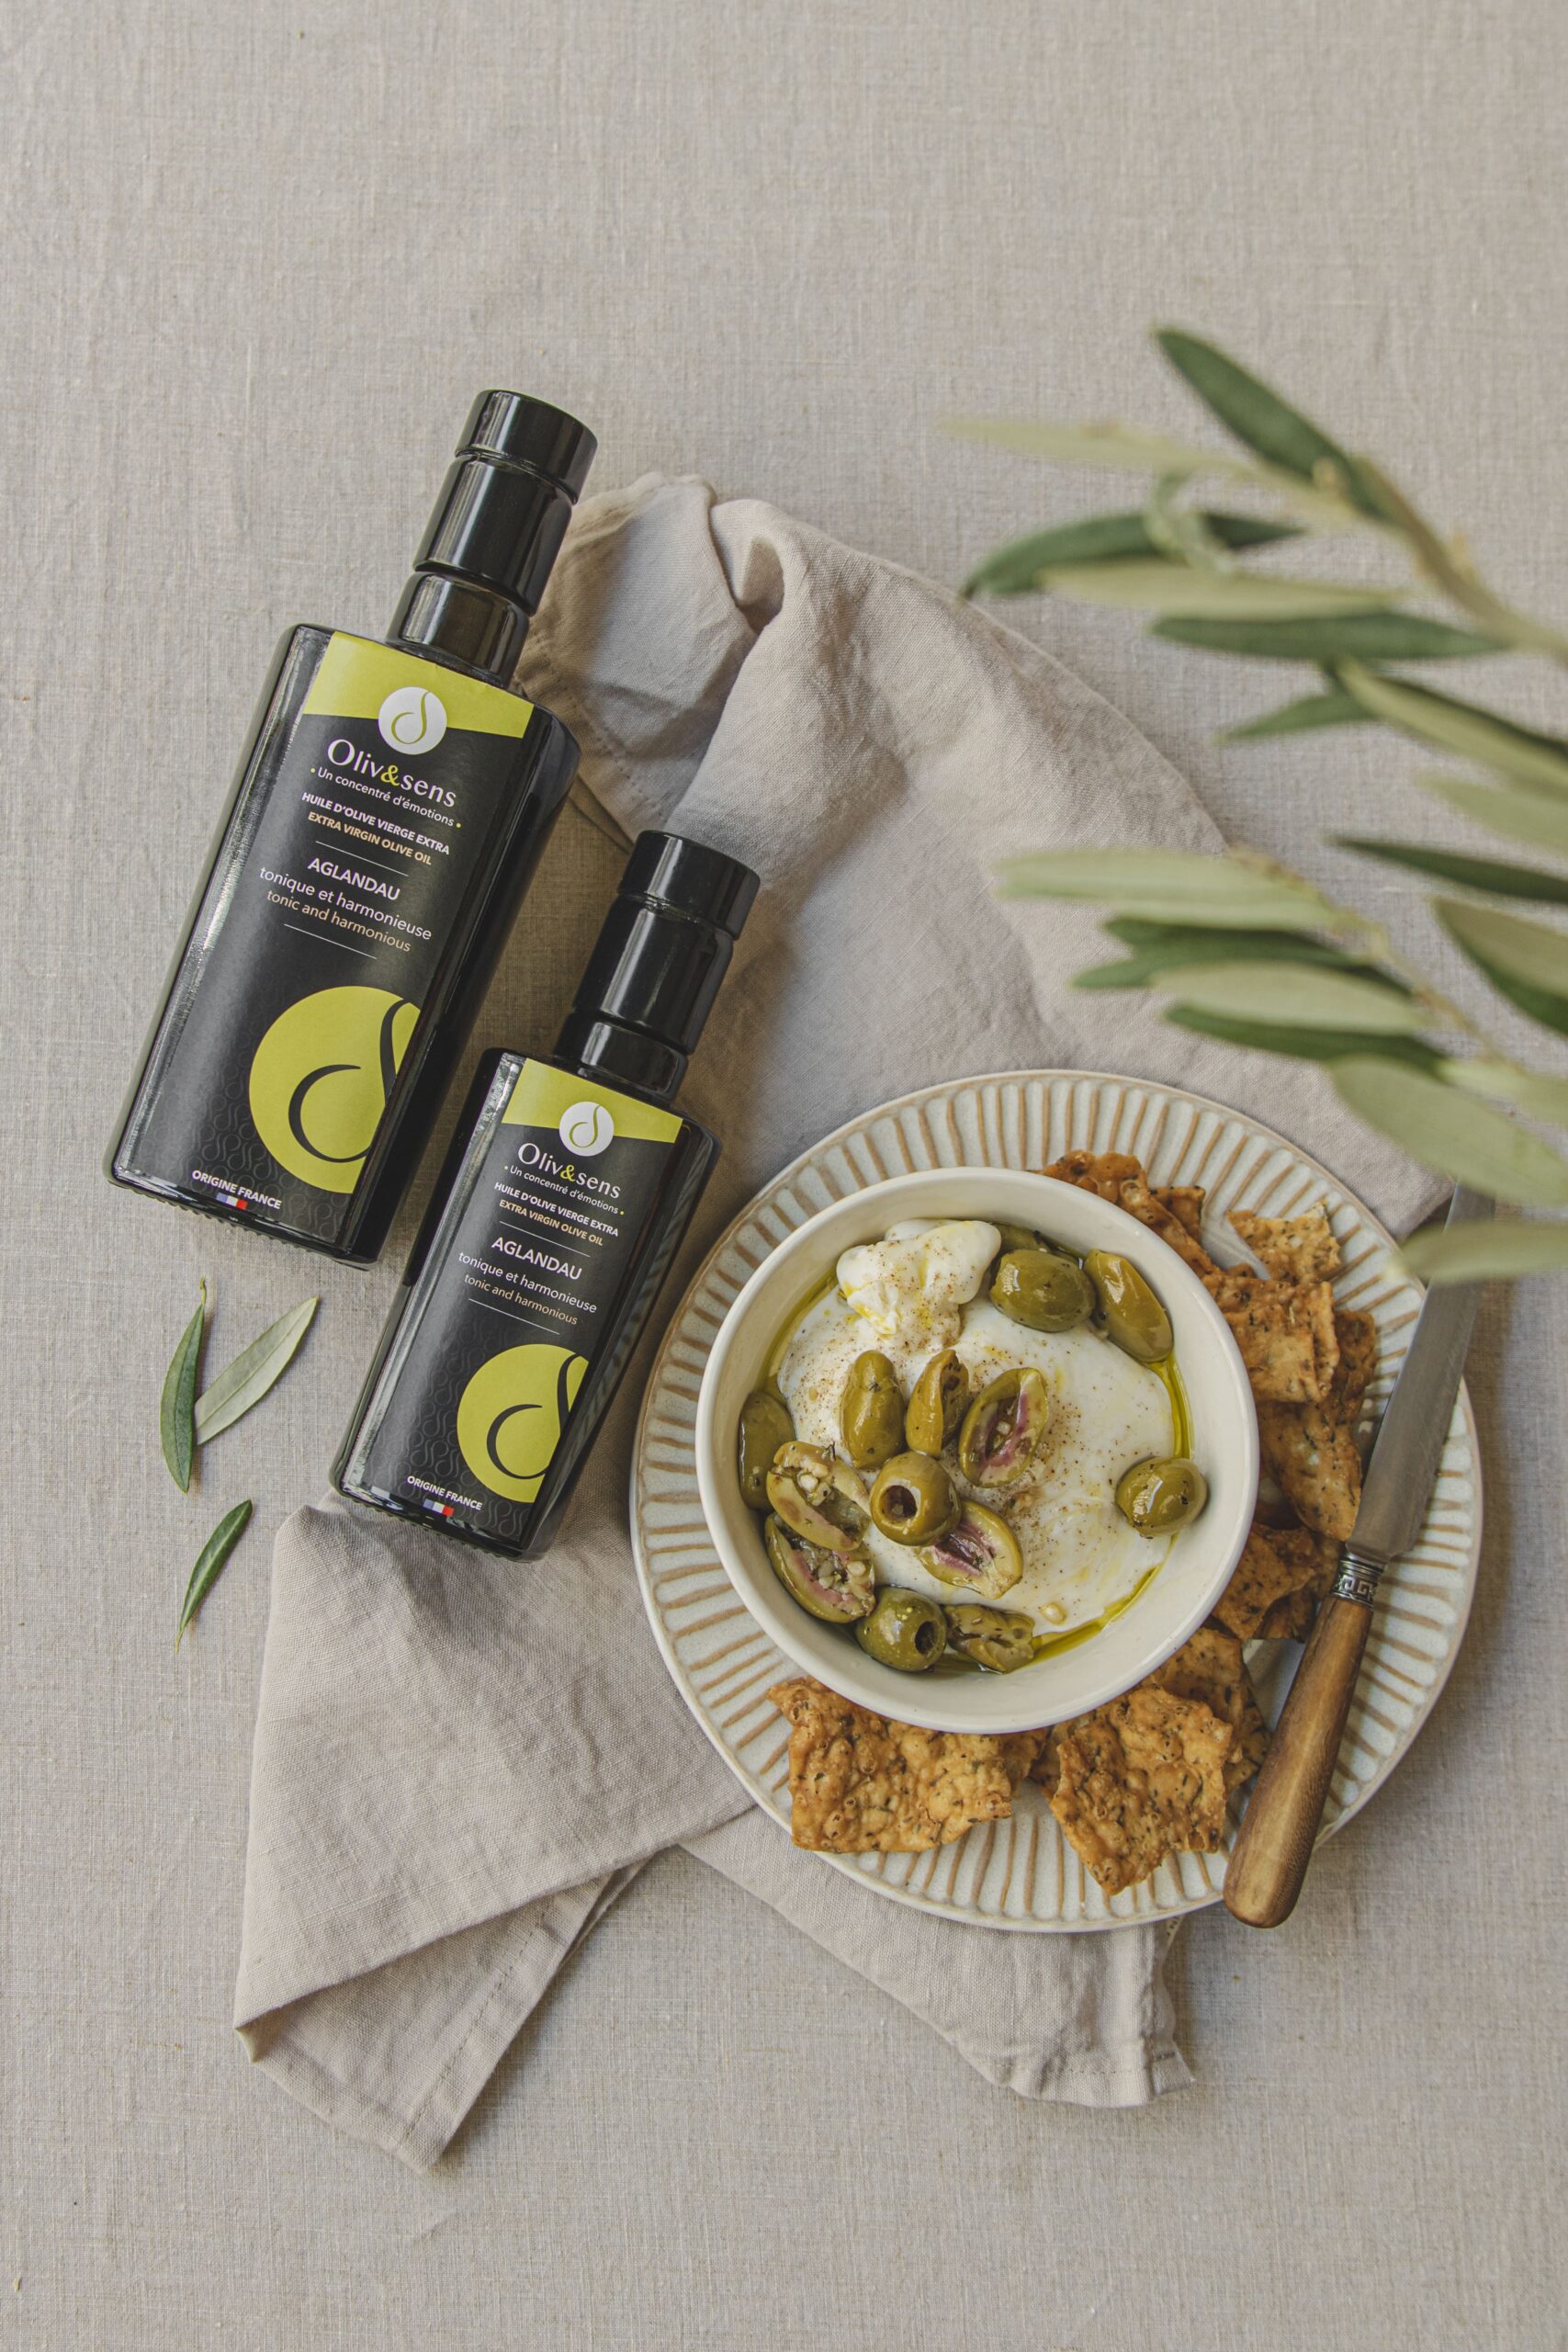 huile d'olive vierge extra Aglandau huile d'olive de France huile d'olive haut de gamme huile d'olive artisanale monovariétale olive et sens